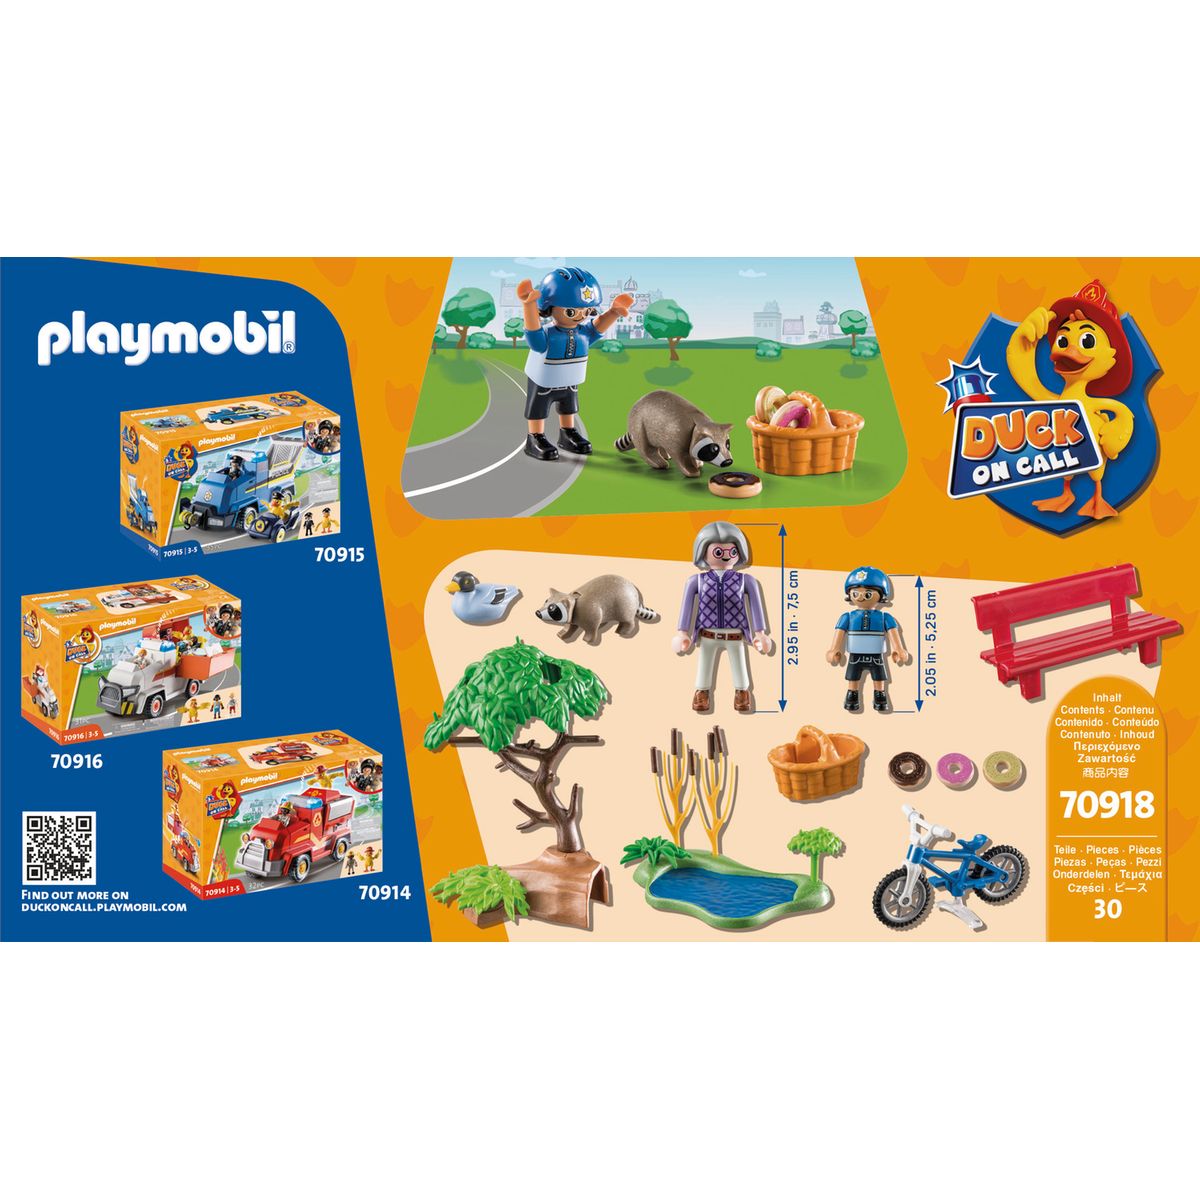 Playmobil - 70919 - Duck on Call - Secouriste et pilote